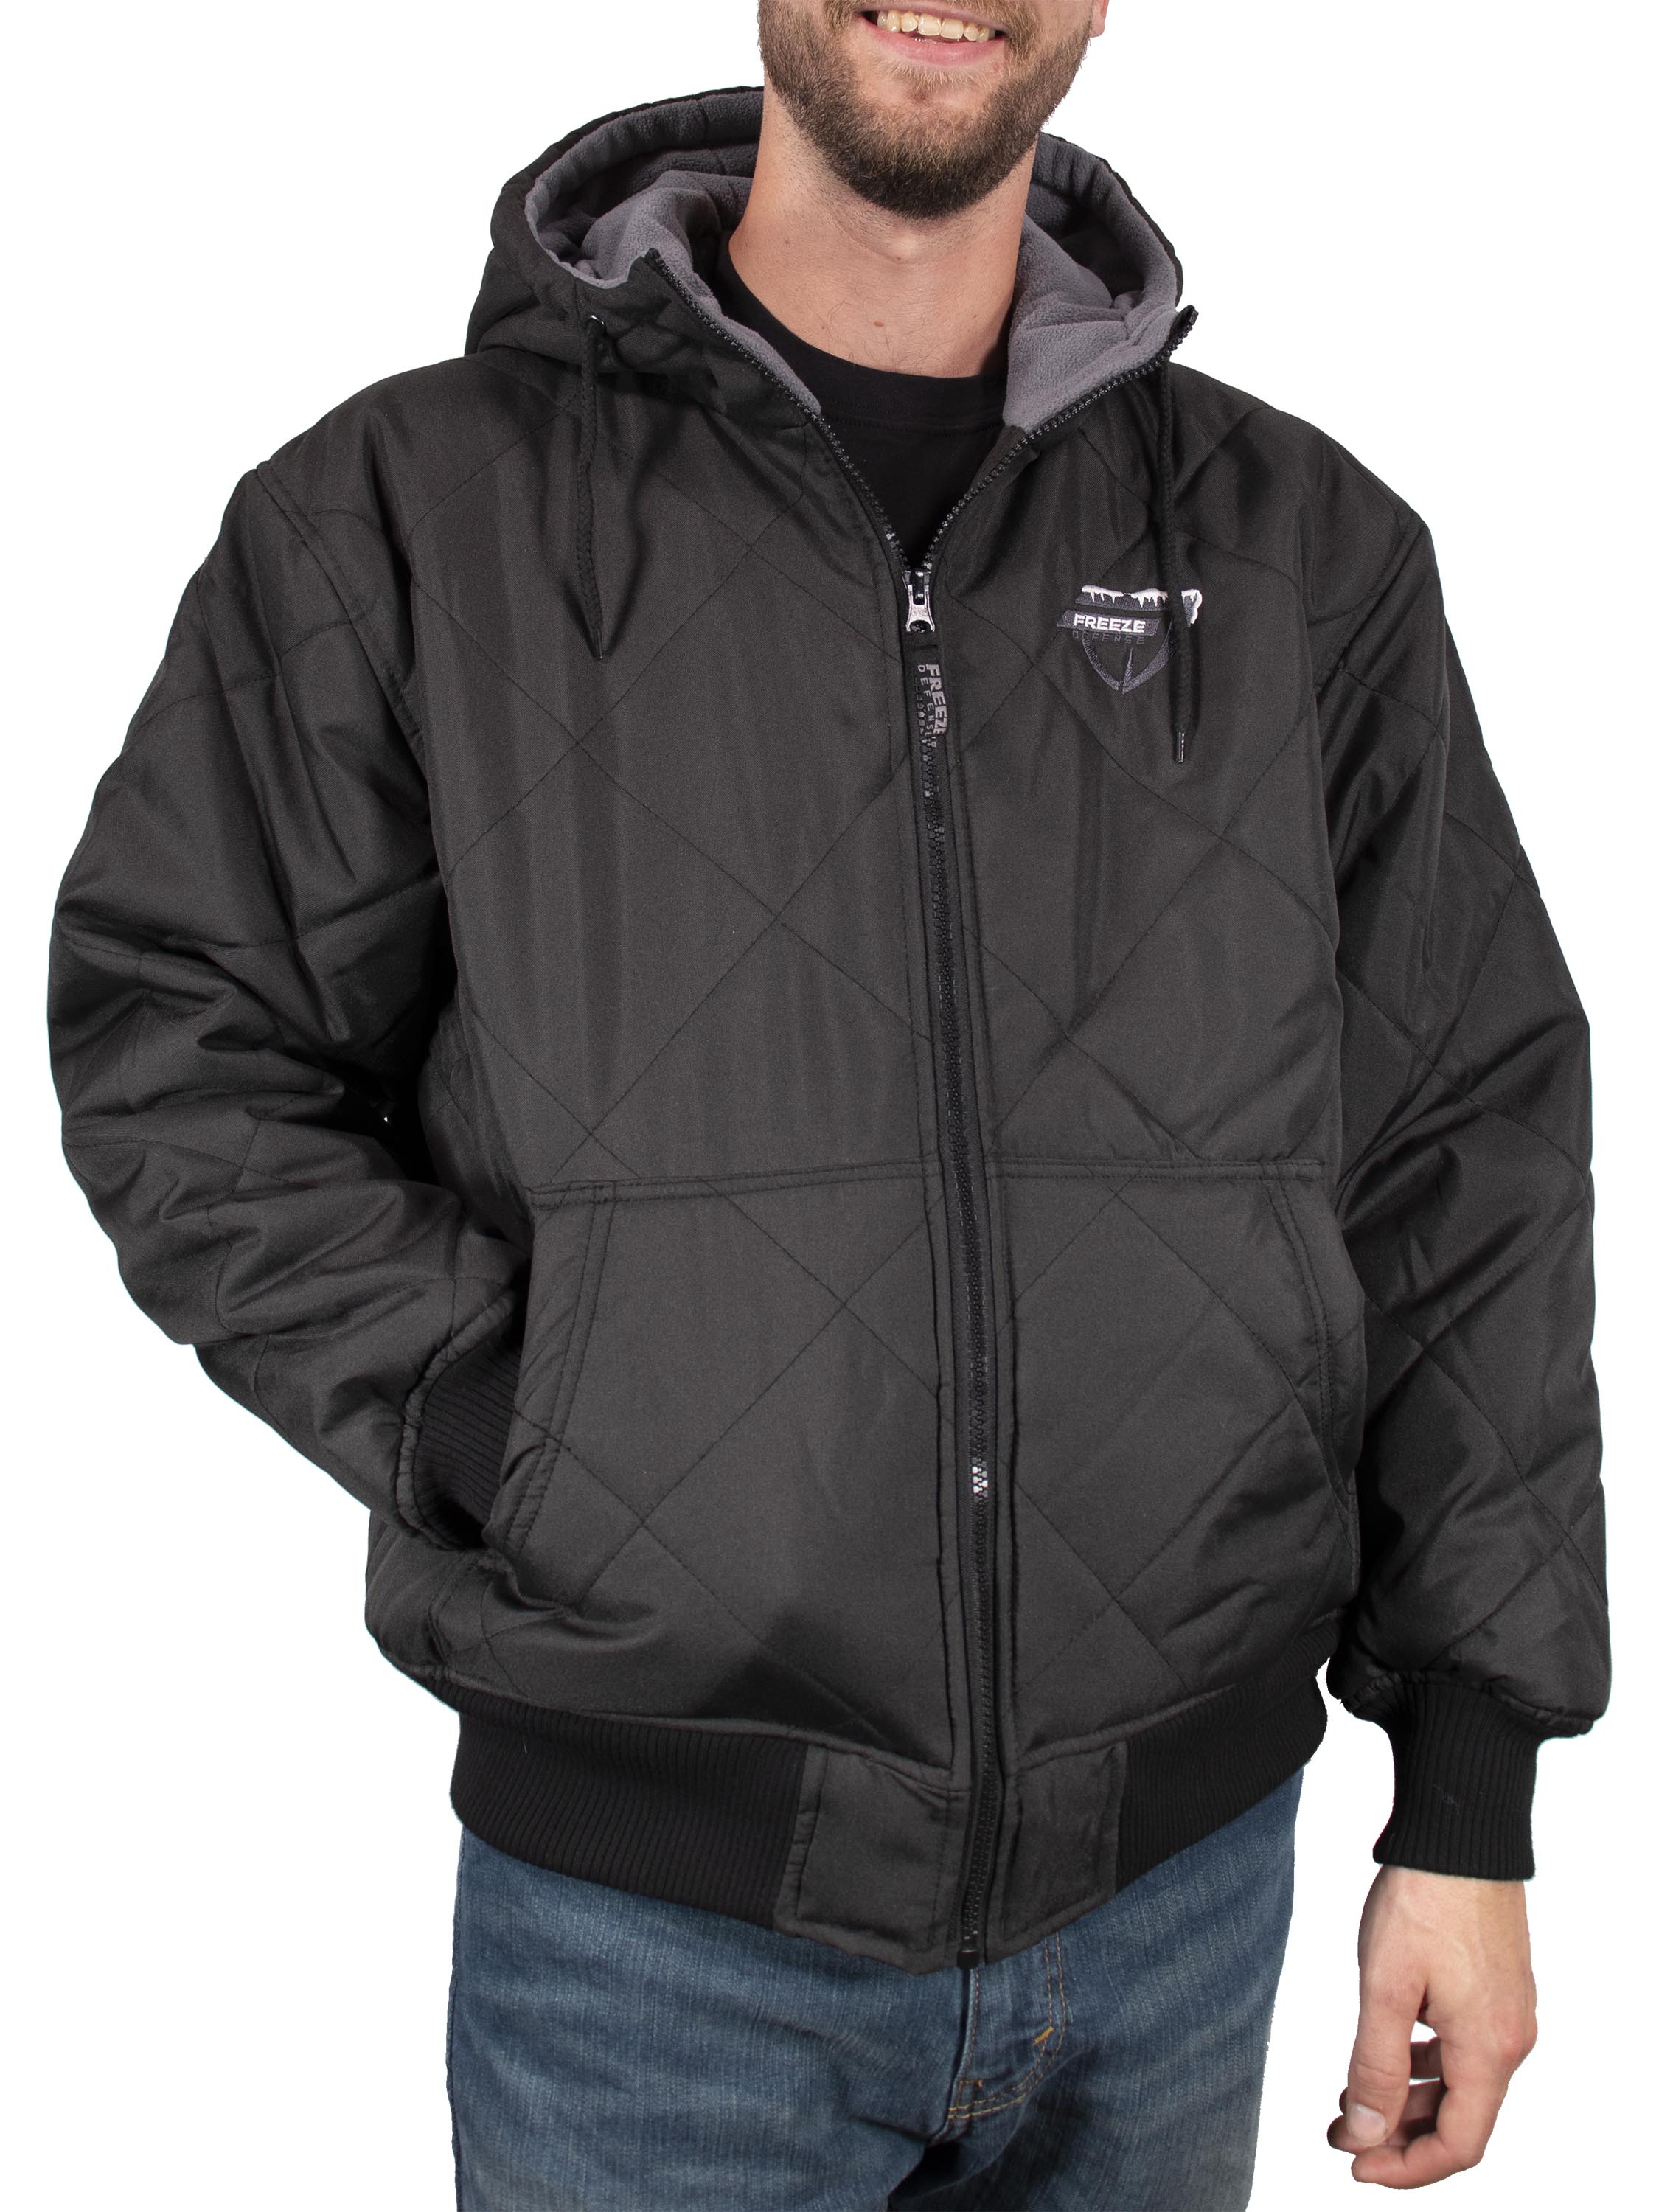 YYG Mens Fall & Winter Fleece Warm Plus Size Hoodie Quilted Jacket Coat Outerwear